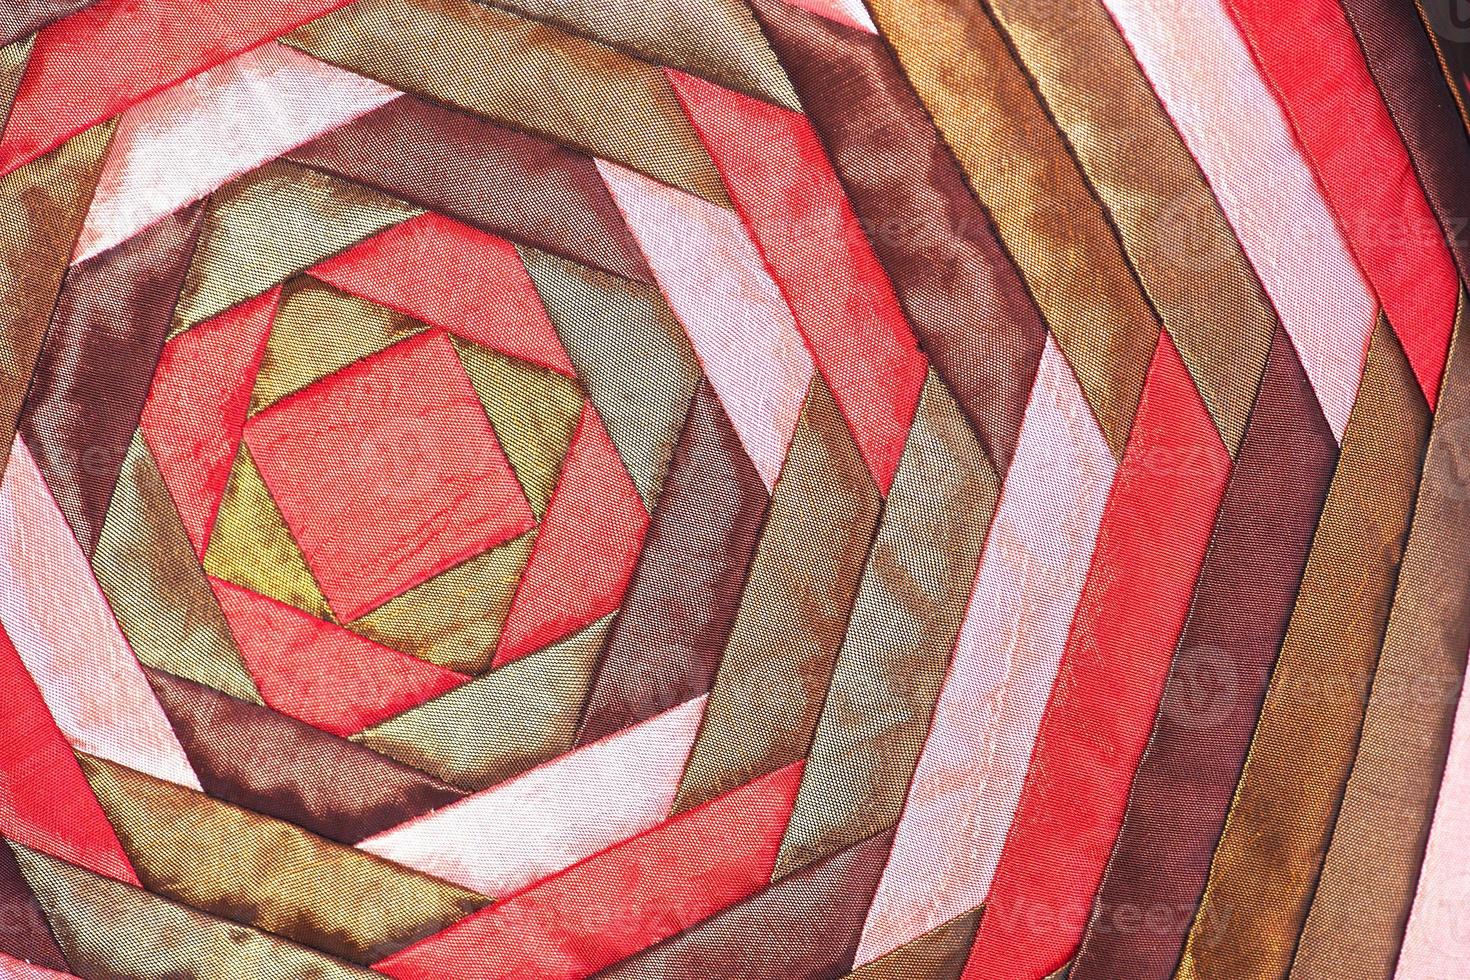 superfície de tapete colorido artesanato tailandês seda estilo peruano close-up foto